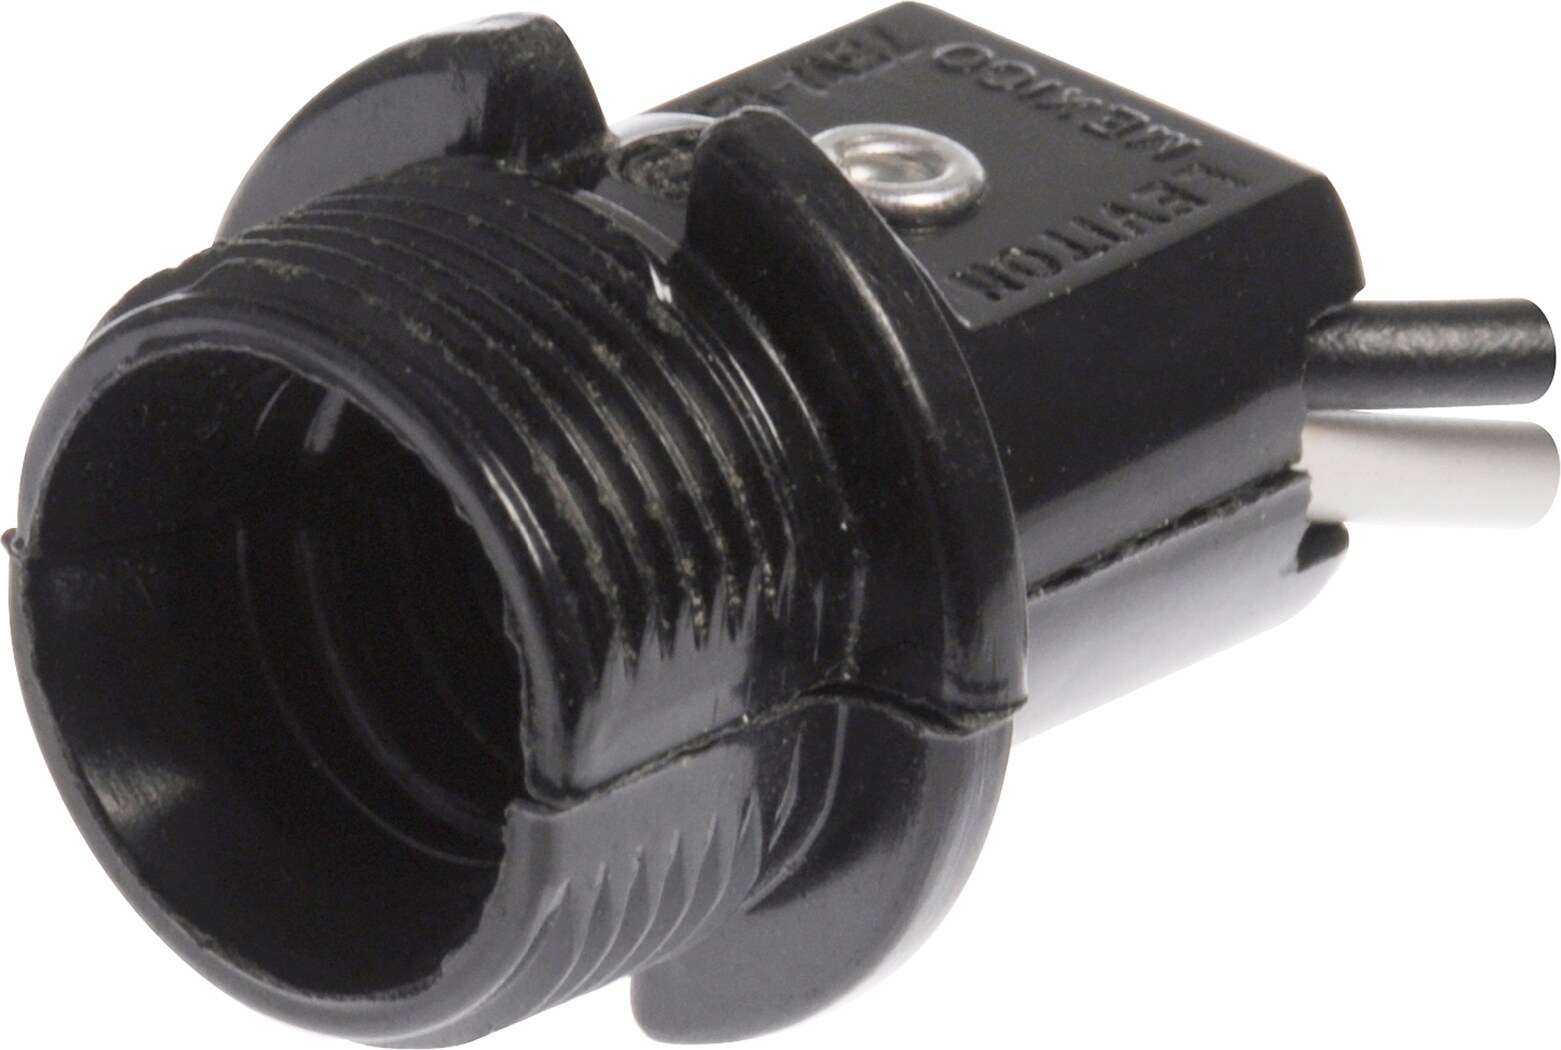 Lot of 3 Hillman Light Socket 75-Watt Candelabra Keyless Hard-Wired  #884395 L6 